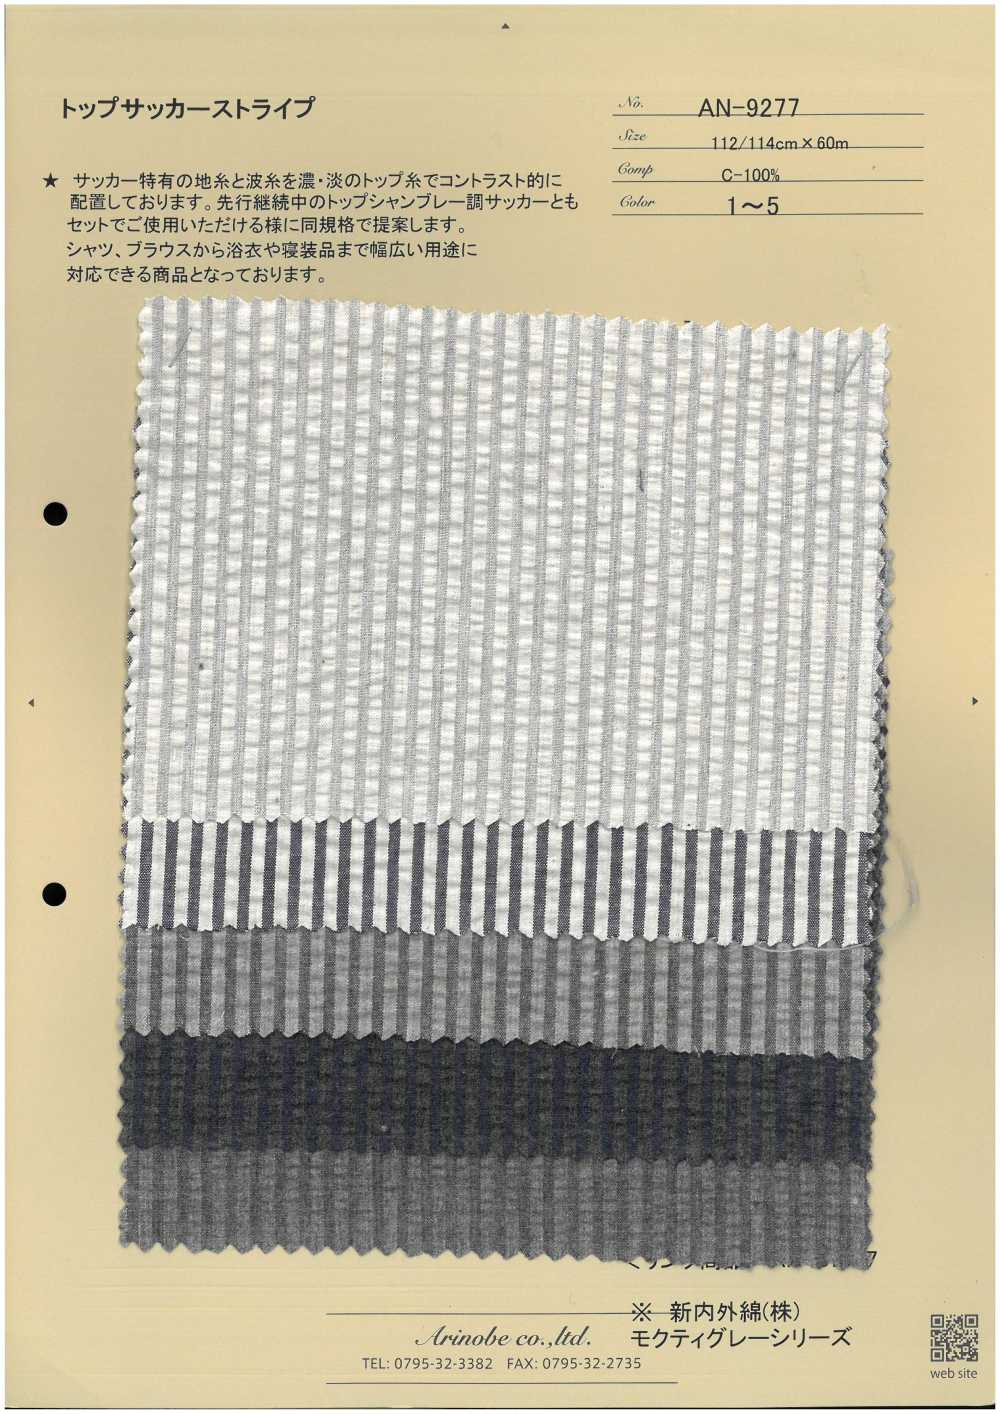 AN-9277 Top-Seersucker-Streifen[Textilgewebe] ARINOBE CO., LTD.